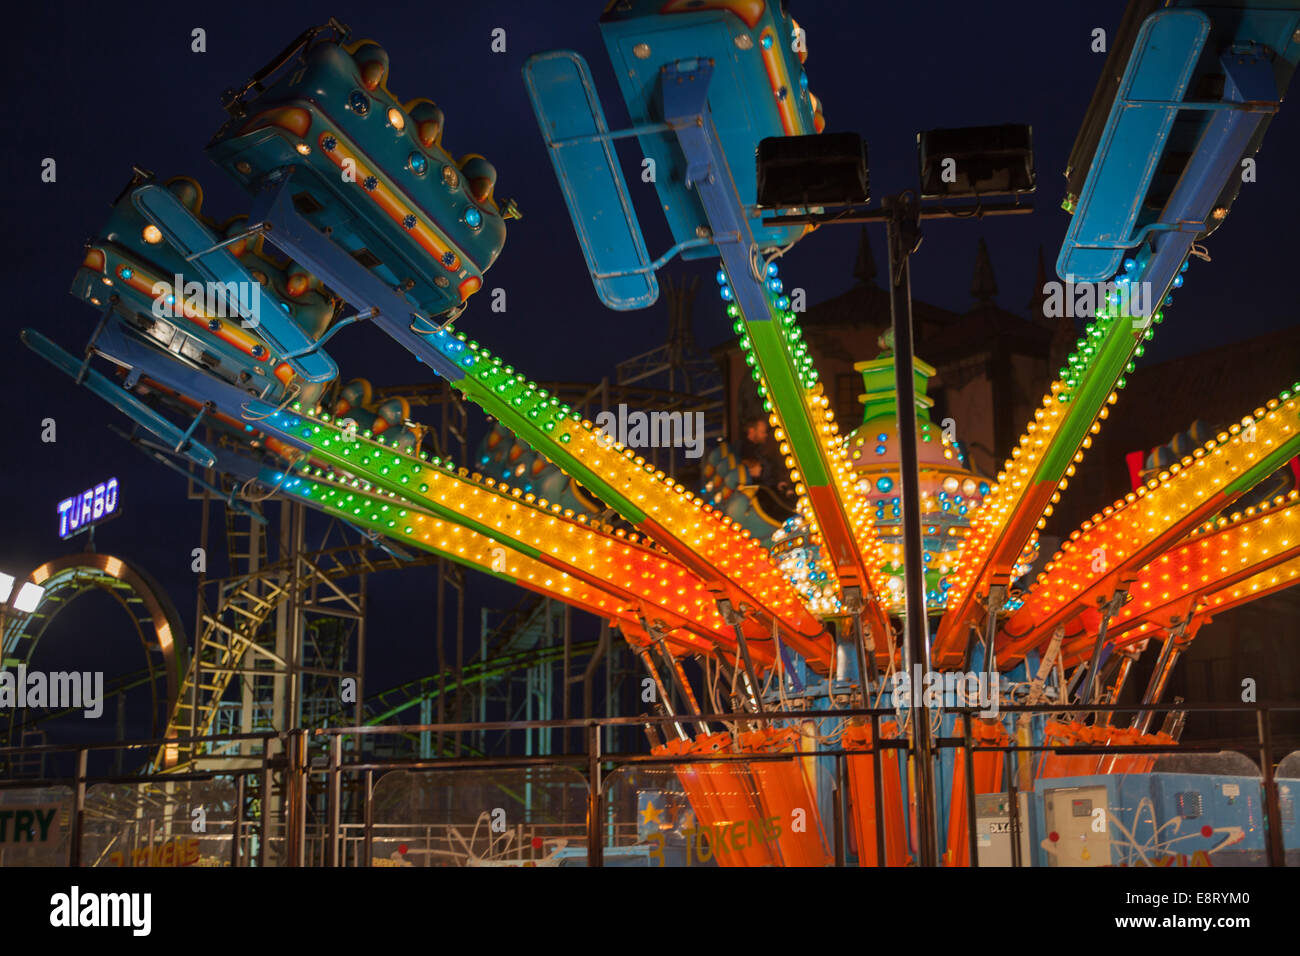 The Brighton Pier fairground at night. Stock Photo